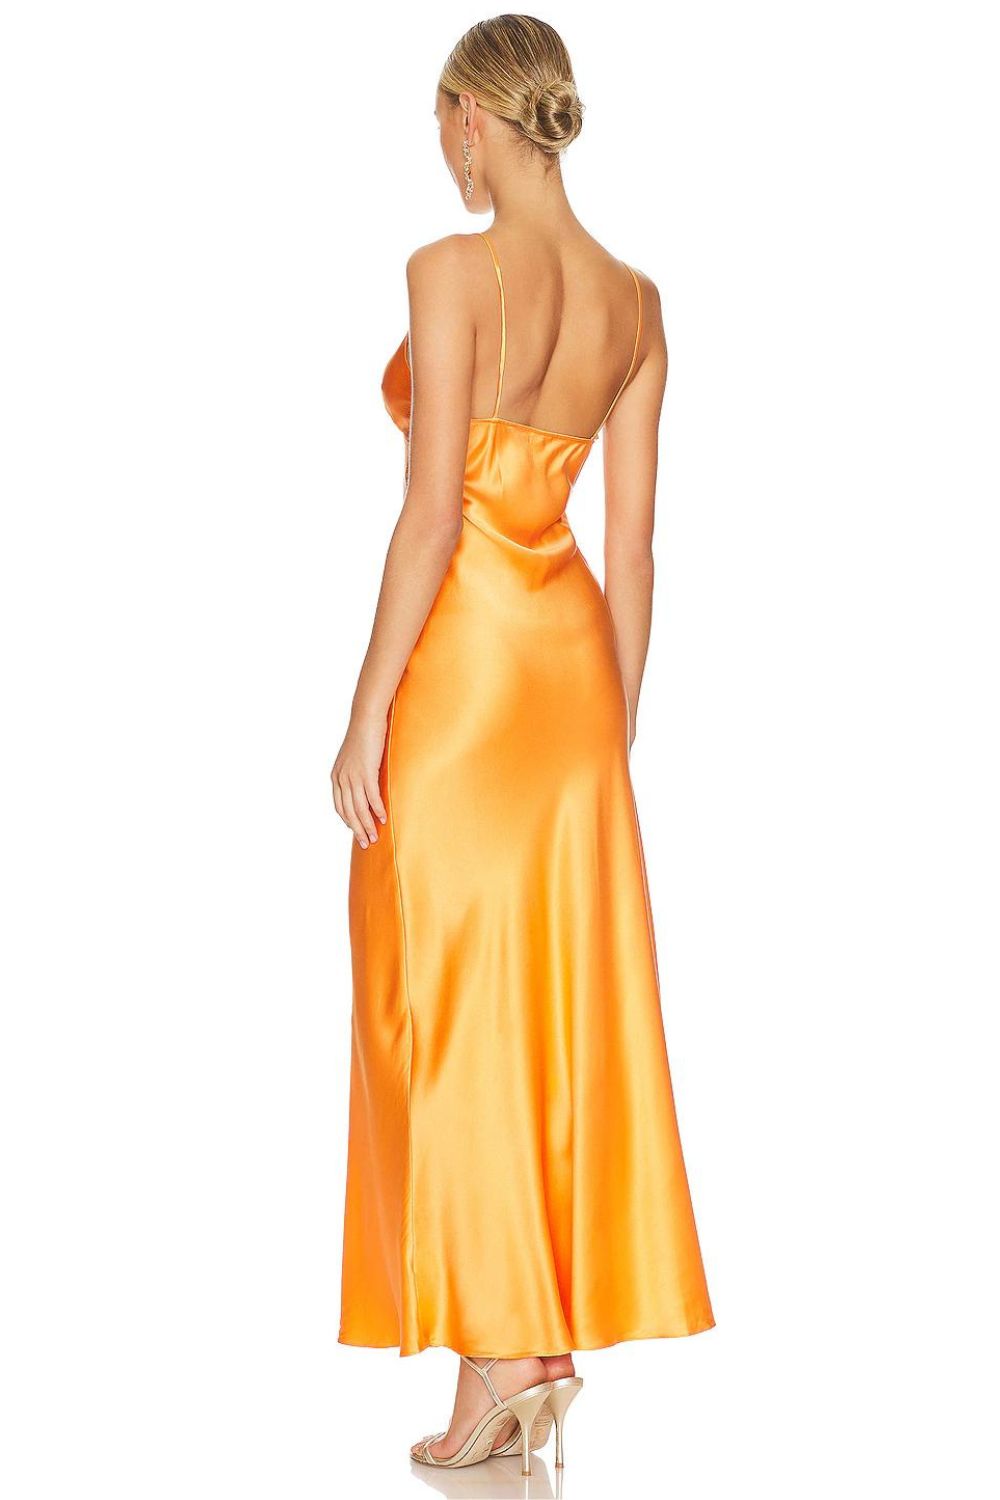 Bec & Bridge | Amber V Maxi Dress | Nectarine Orange